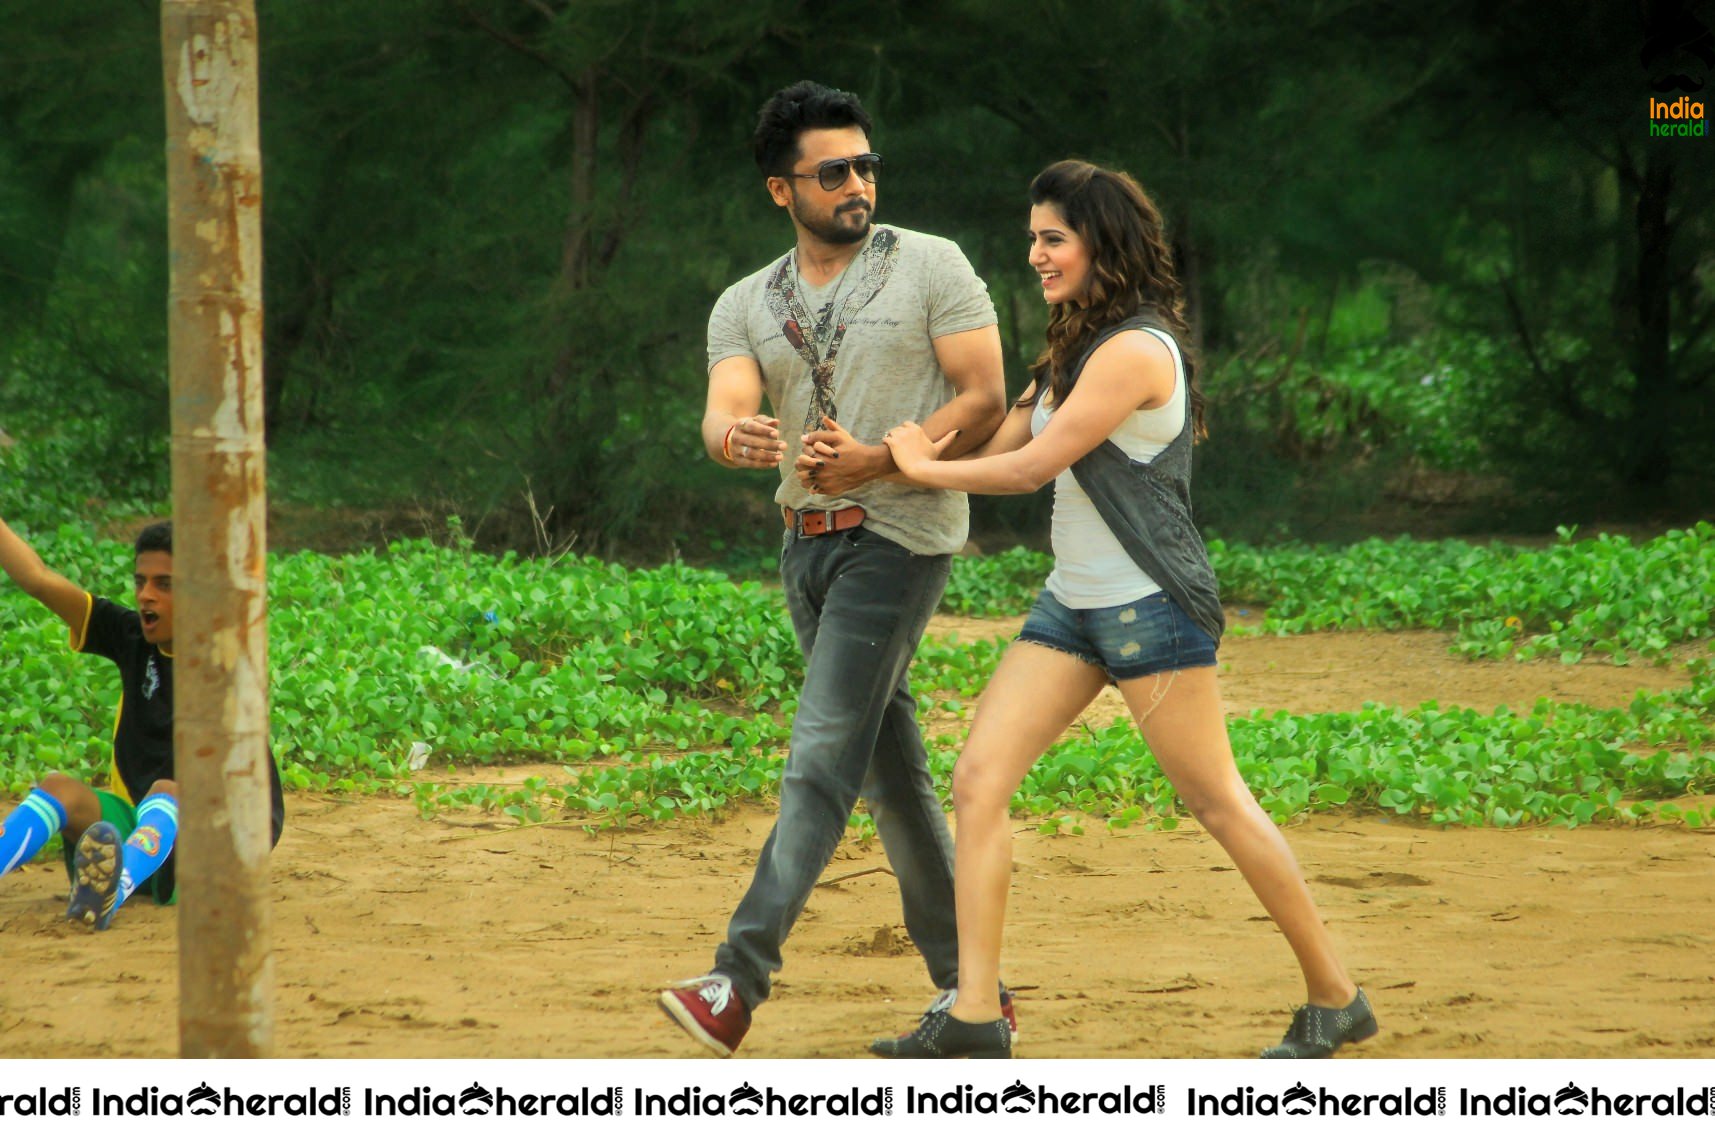 INDIA HERALD EXCLUSIVE Hot Samantha and Surya Unseen Stills from Sikindar Set 2